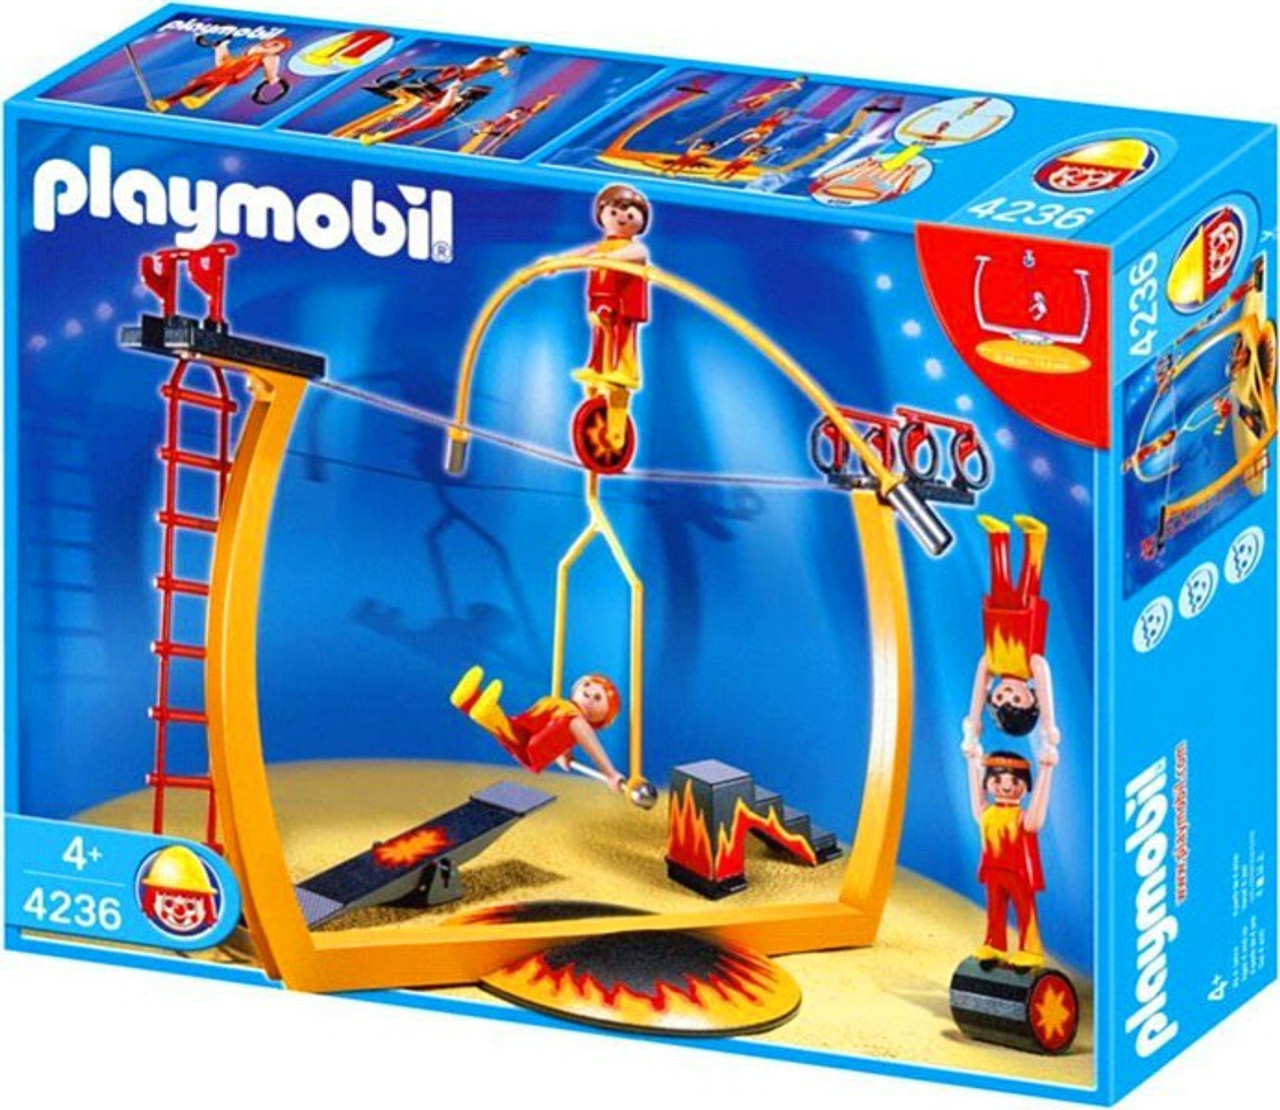 Playmobil Circus Artists Set 4236 Damaged Package - ToyWiz